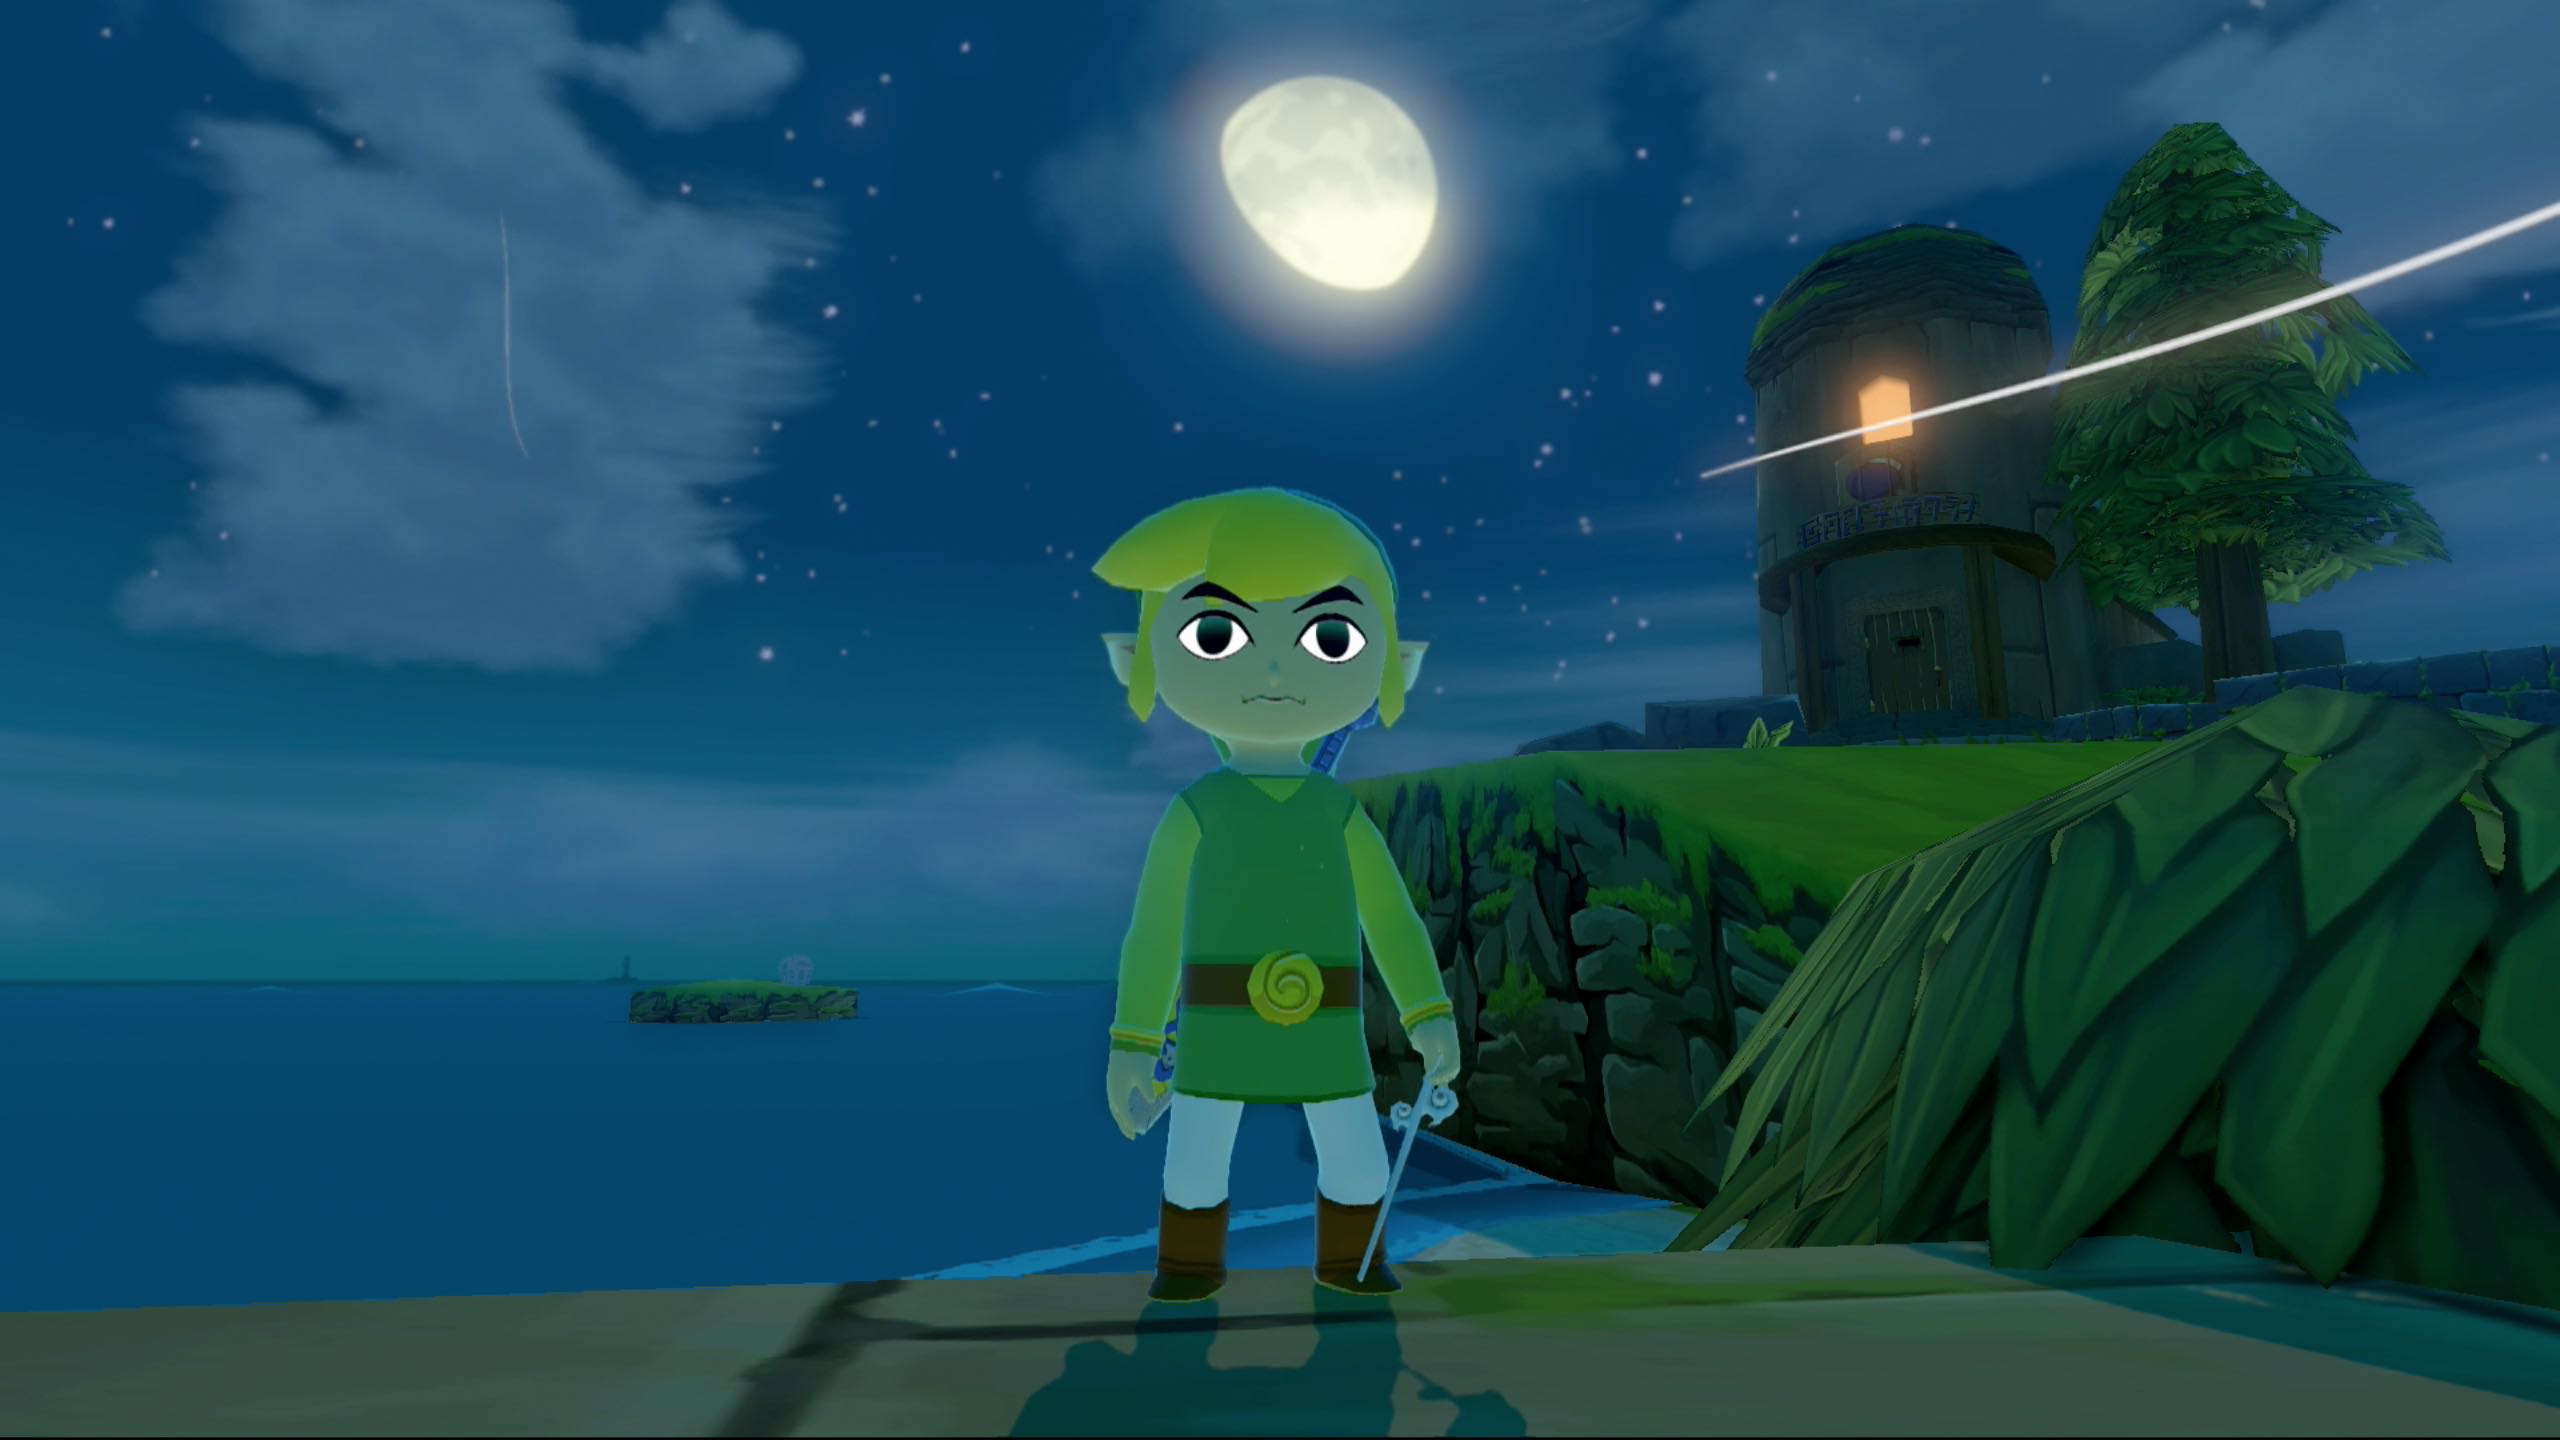 The Legend of Zelda The Wind Waker, Wii U, HD, Gamecube, Switch